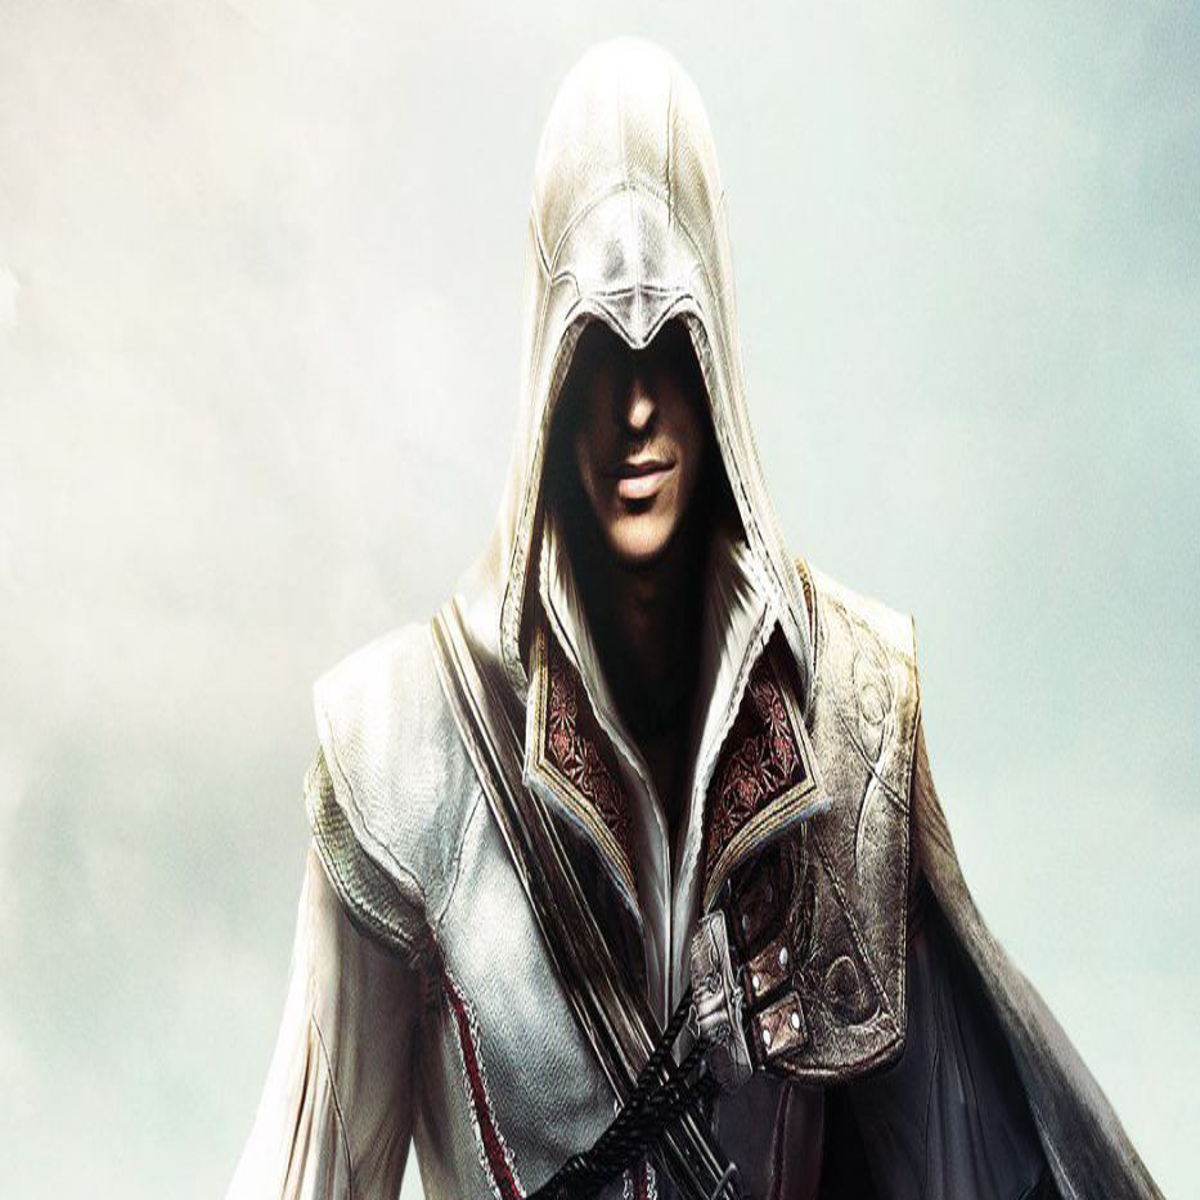 Assassin's Creed II Nintendo Switch Gameplay 